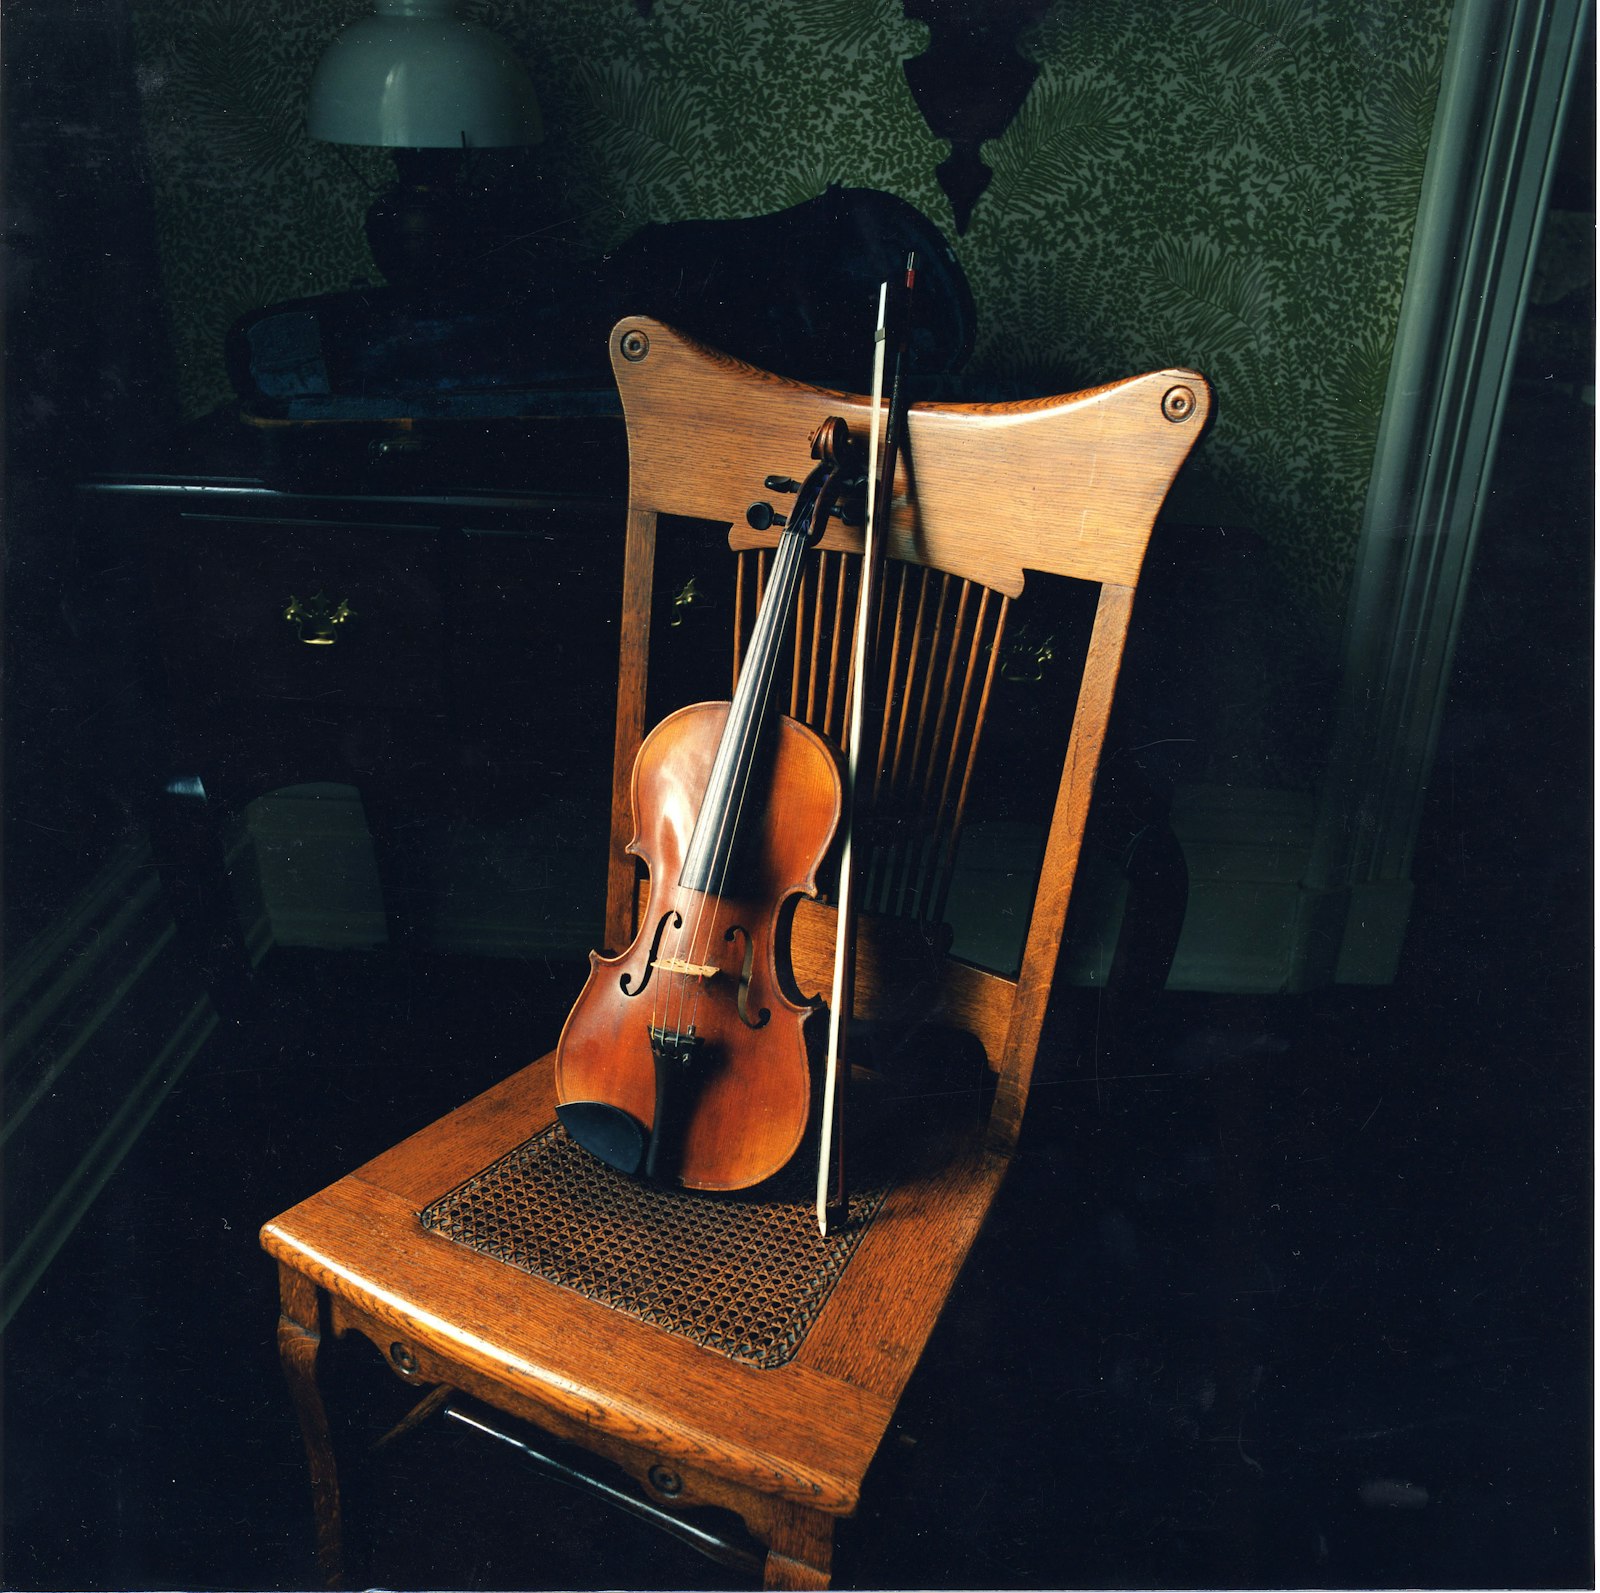 An antique violin sites atop an antique wooden chair